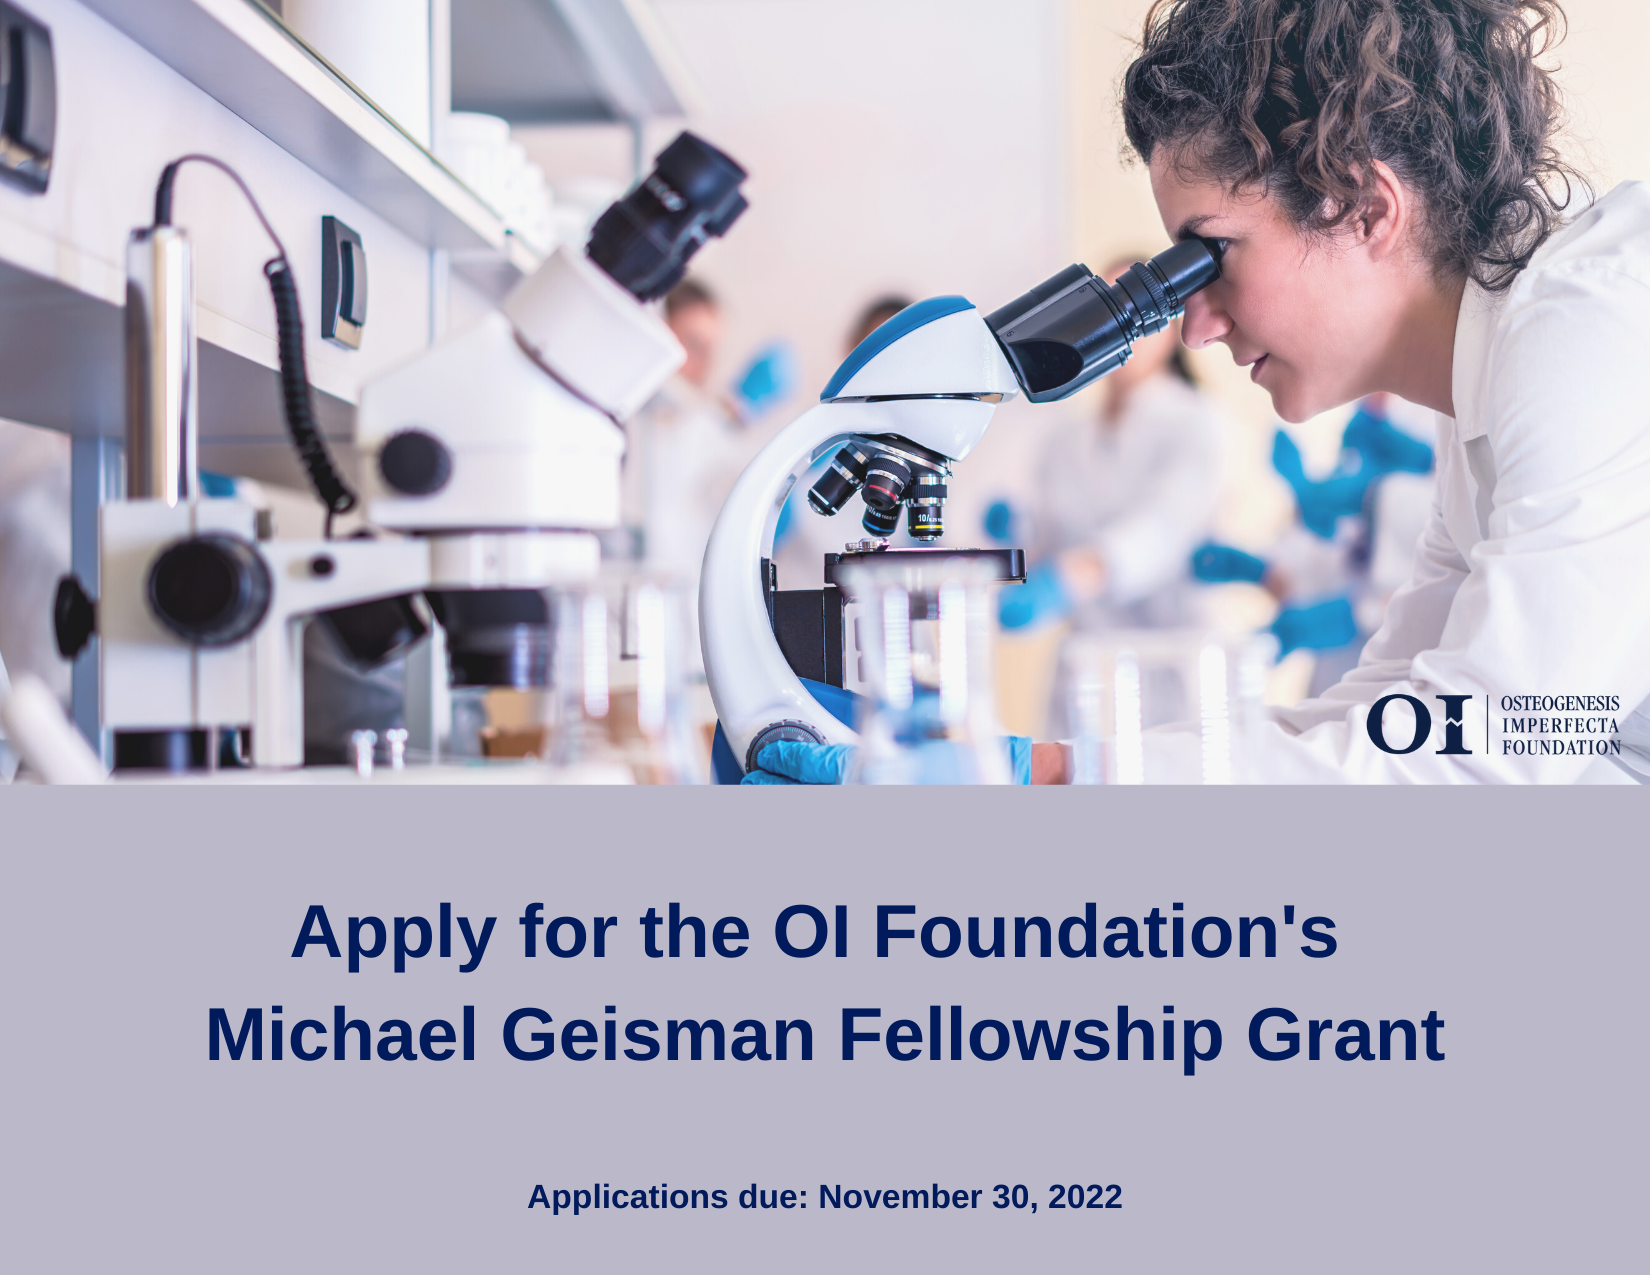 Michael Geisman Fellowship Grant – Applications Now Available